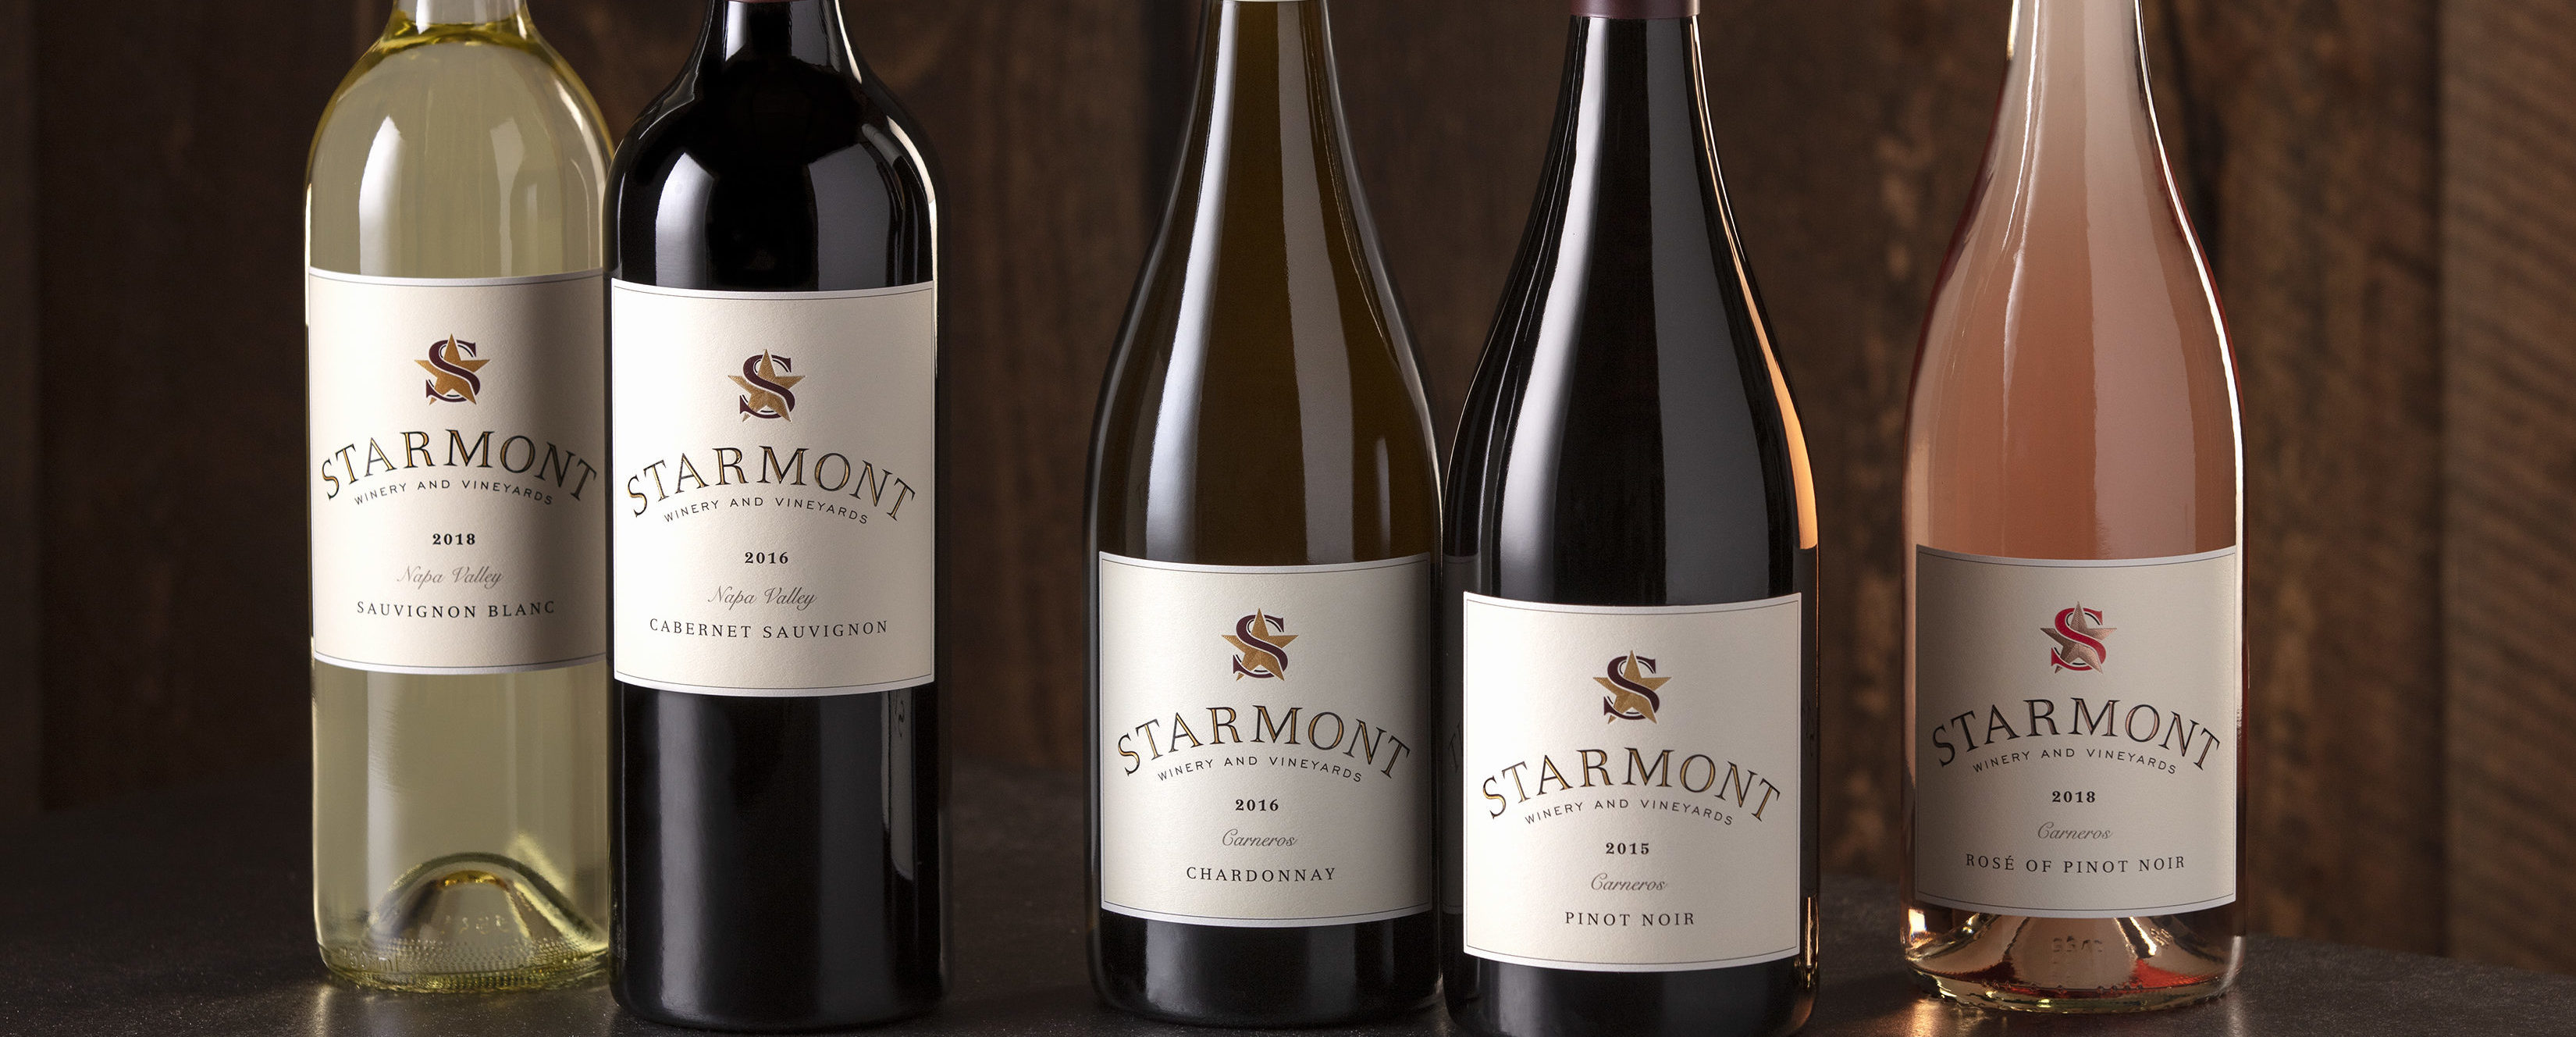 Reviews Starmont Winery Vineyards